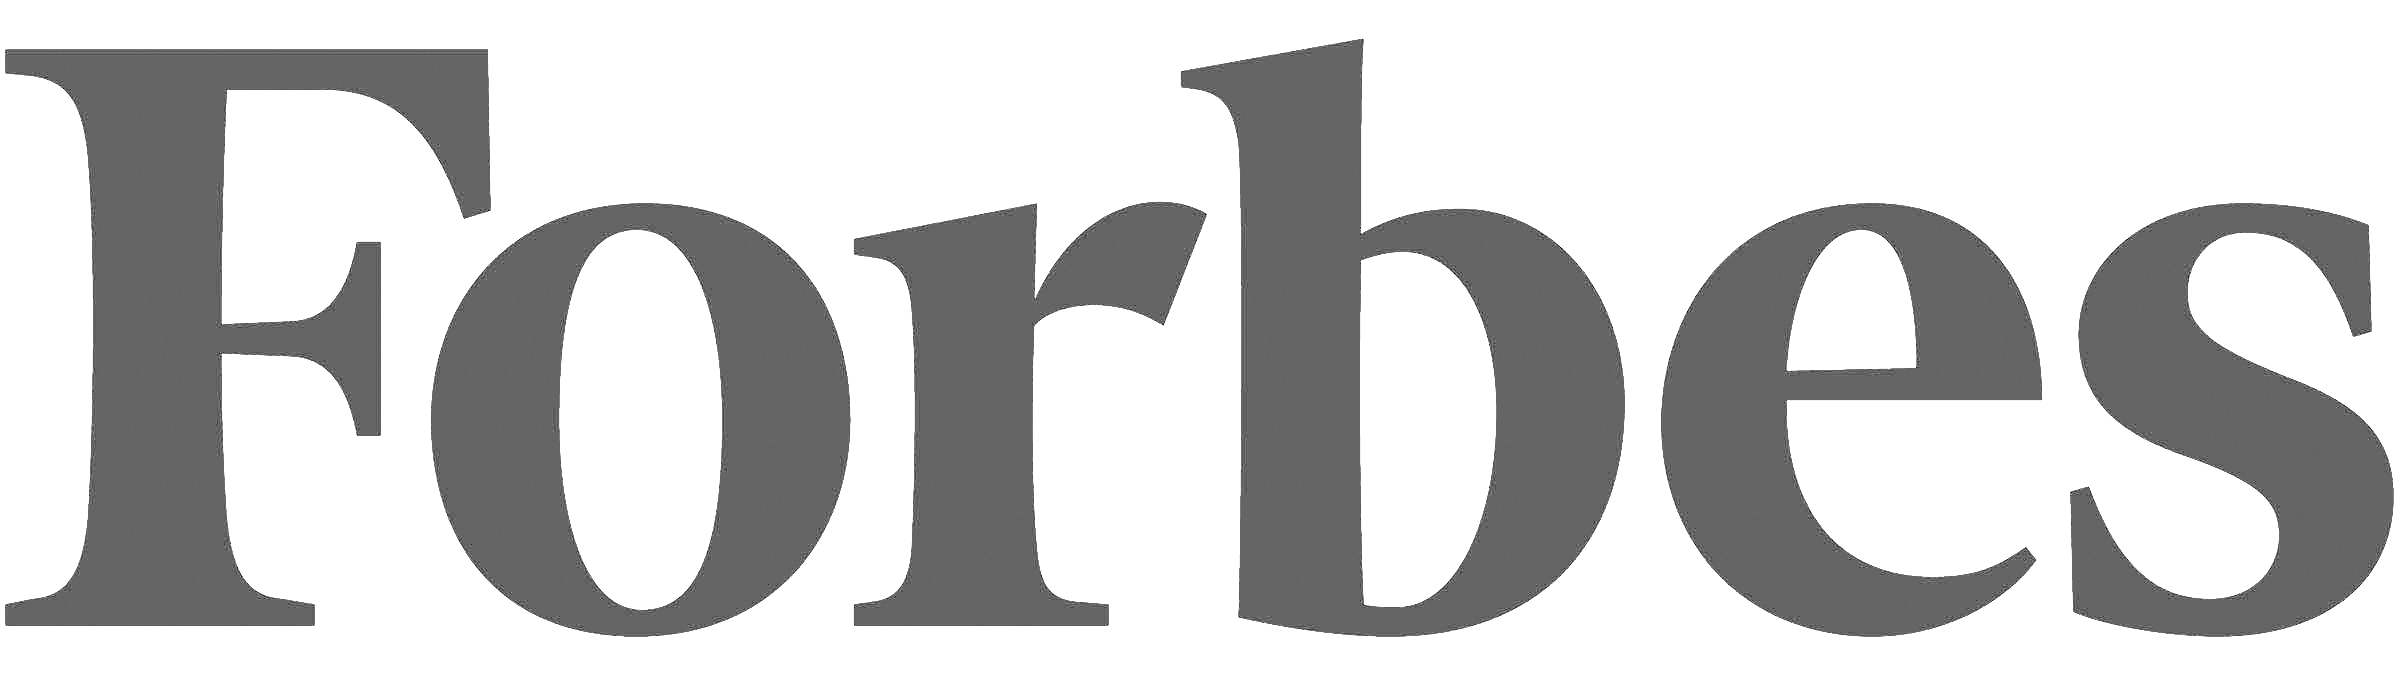 1 Forbes Logo